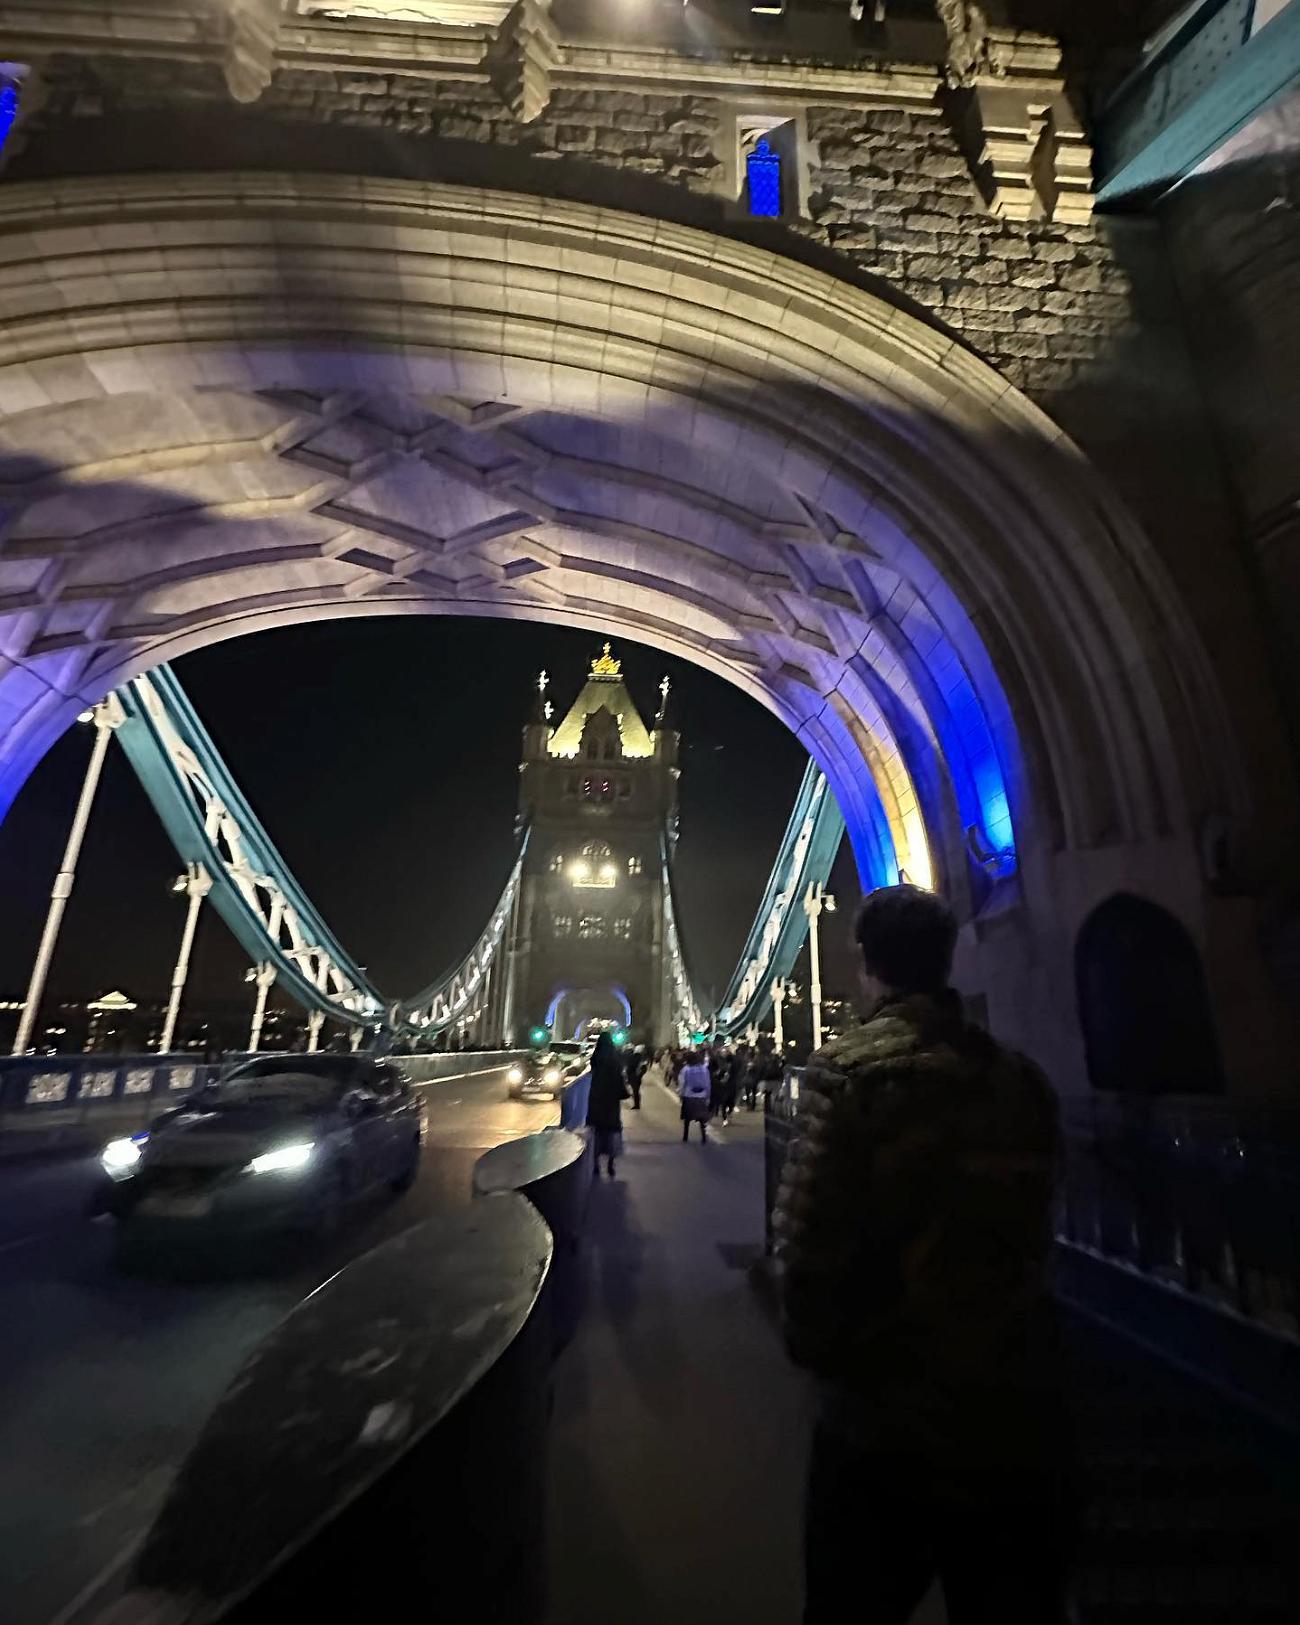 Kindly Myers visits the London Bridge